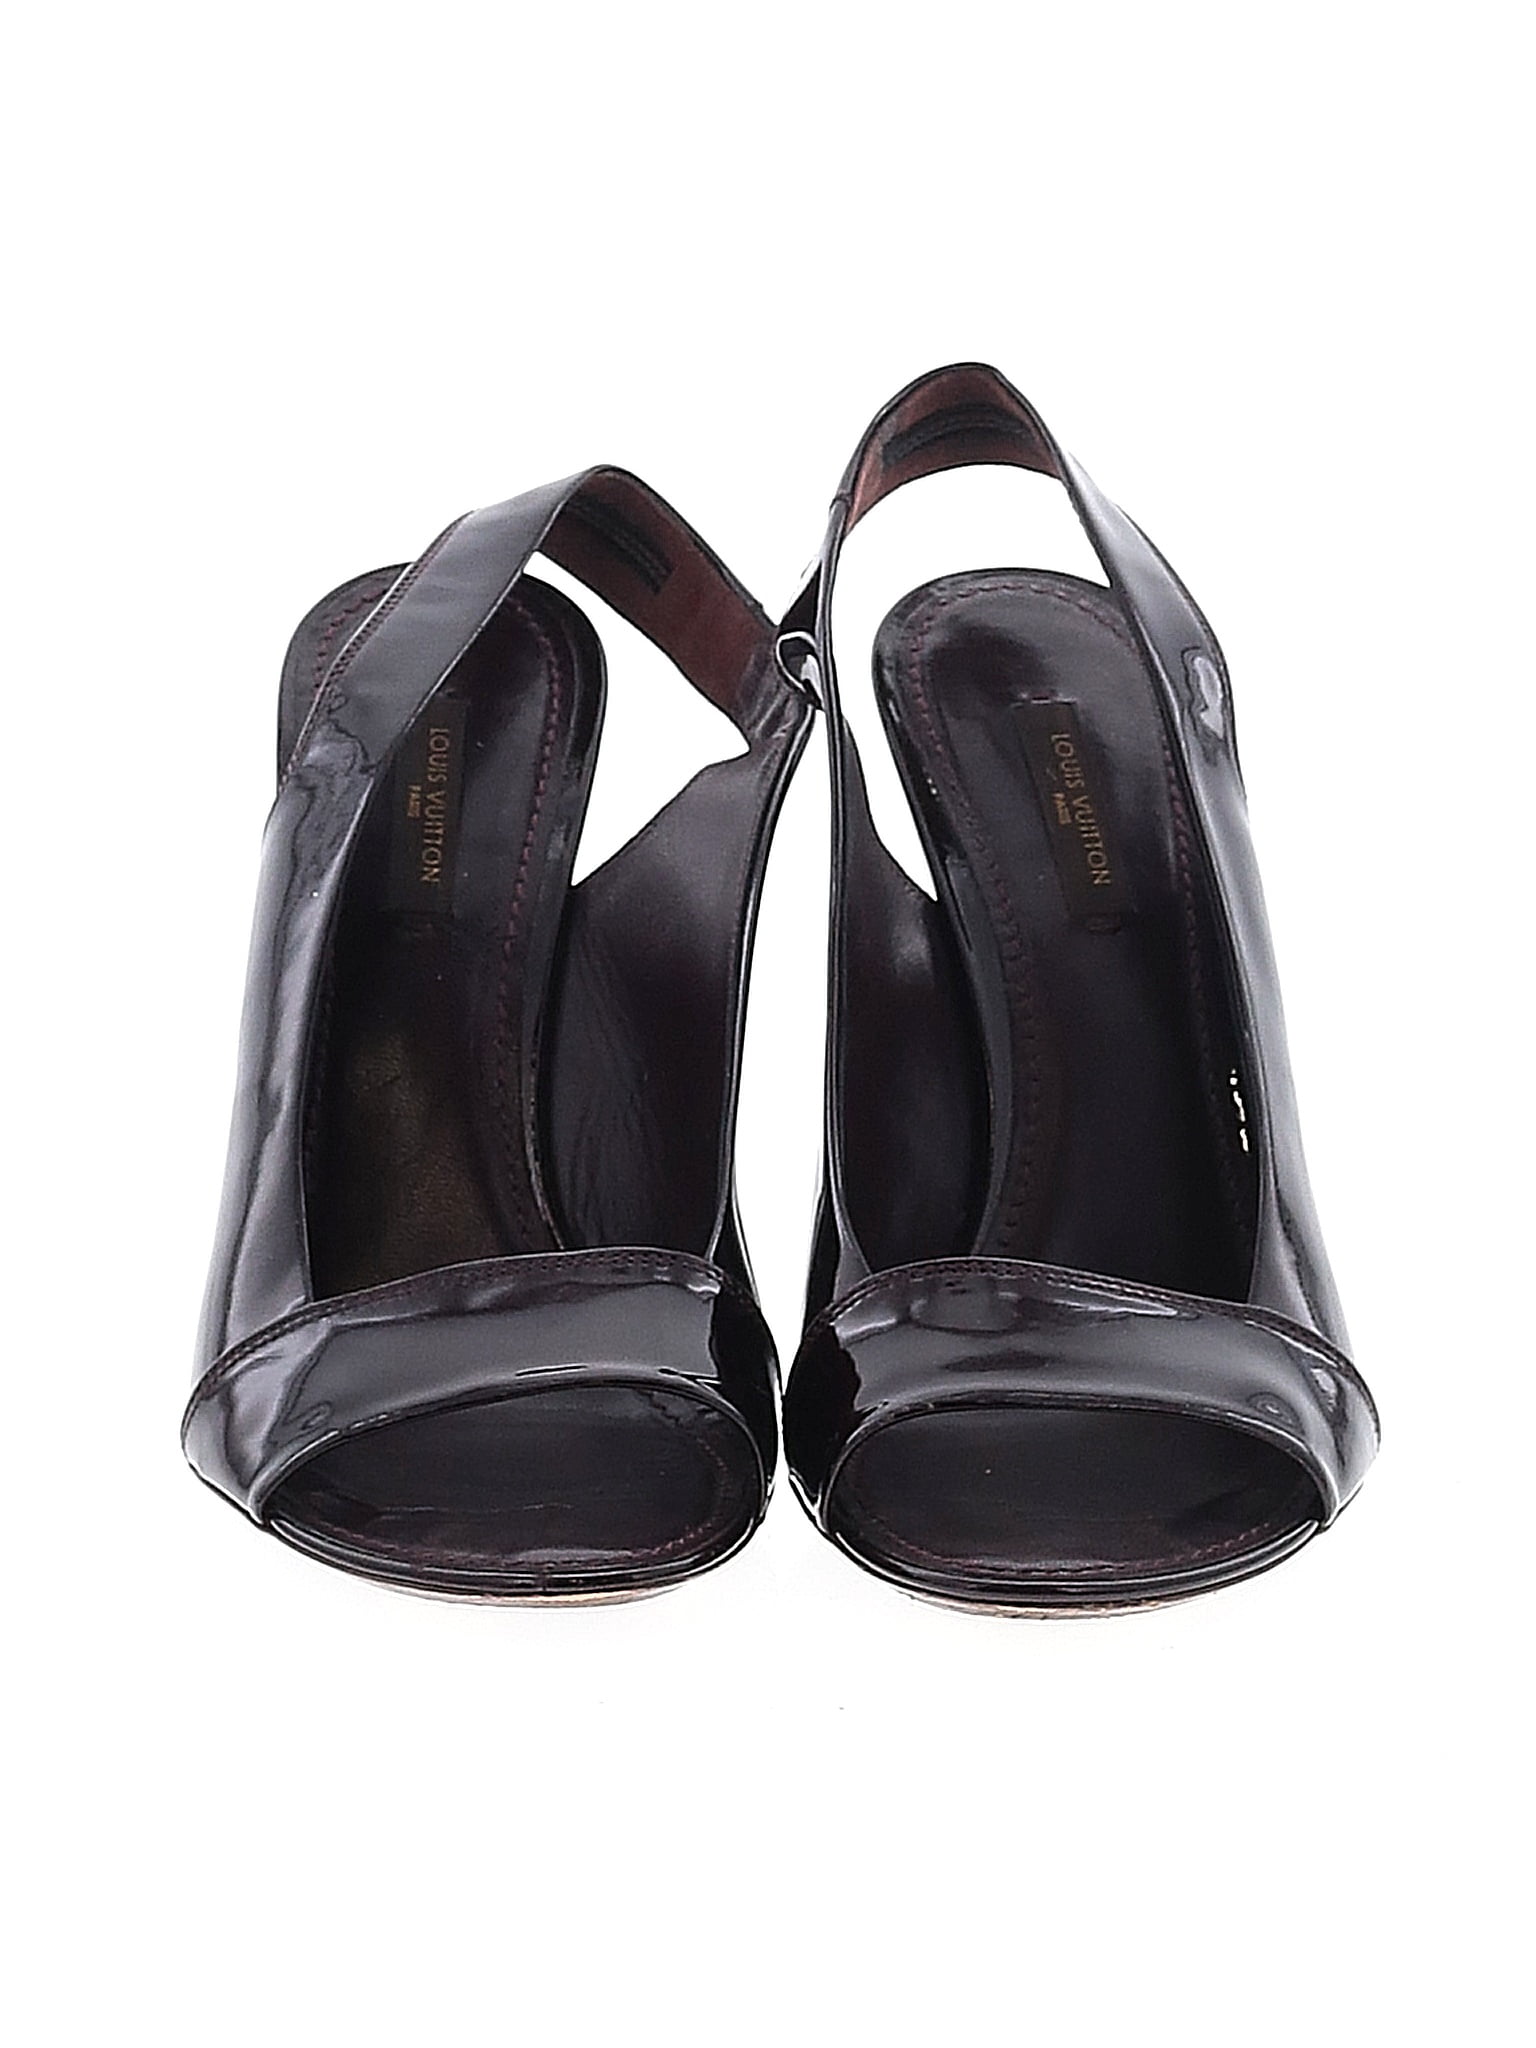 Louis Vuitton Shoes for Women  Black Friday Sale & Deals up to 64